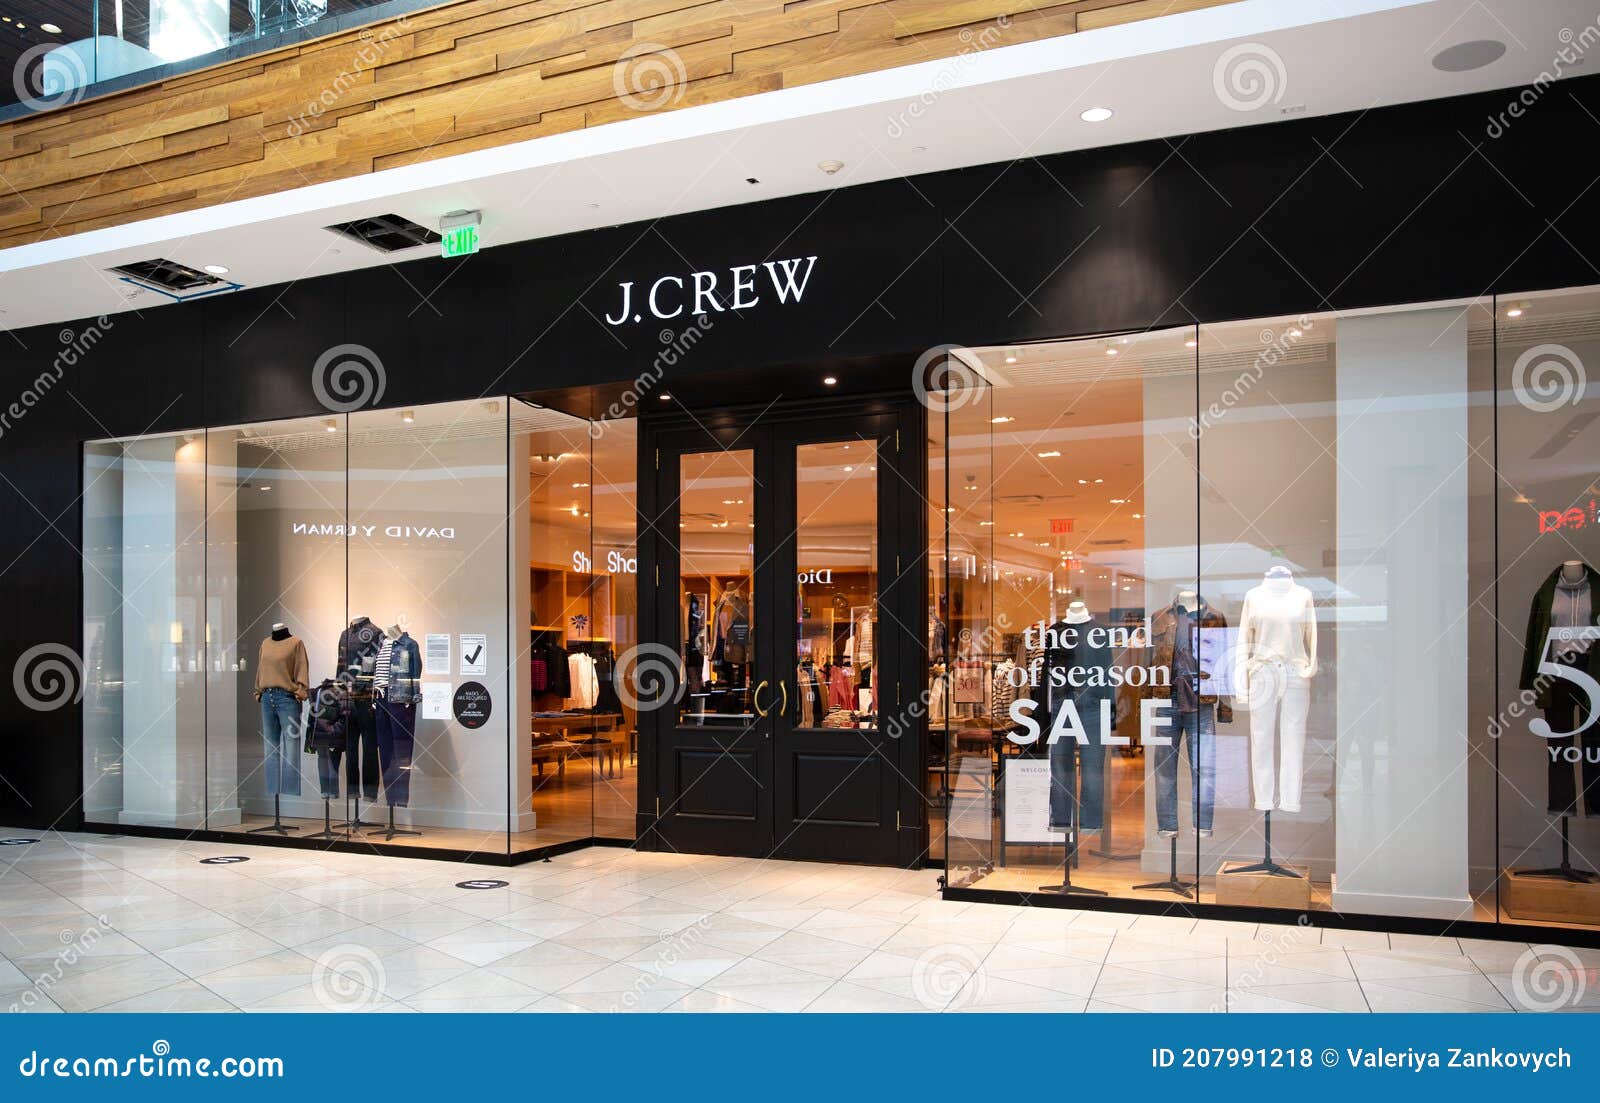 Santa Clara, CA USA - January 14, 2021: J. Crew Fashion Luxury Designer  Store Boutique in a Shopping Mall Editorial Stock Photo - Image of emblem,  2021: 207991218